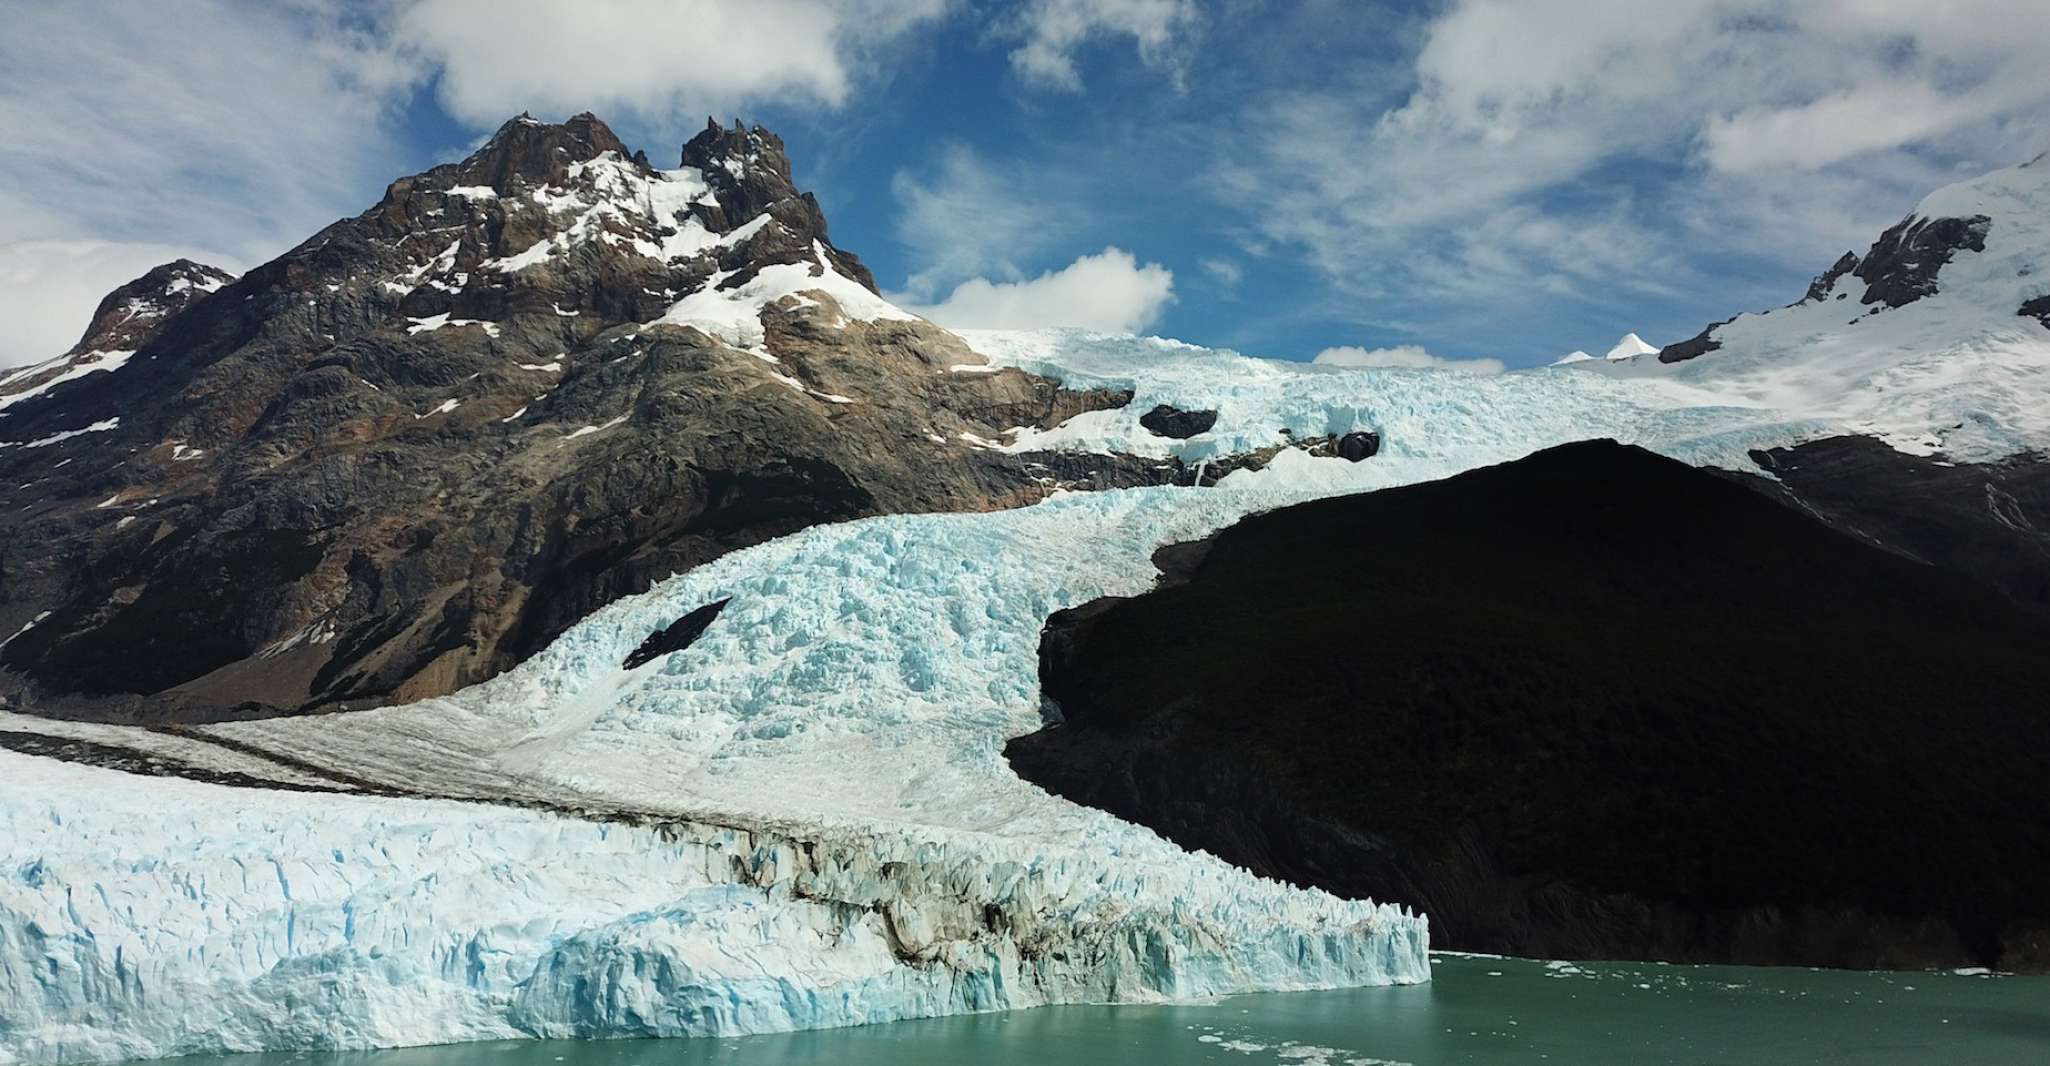 Gourmet Glacier Cruise & Footbridges of Perito Moreno - Housity